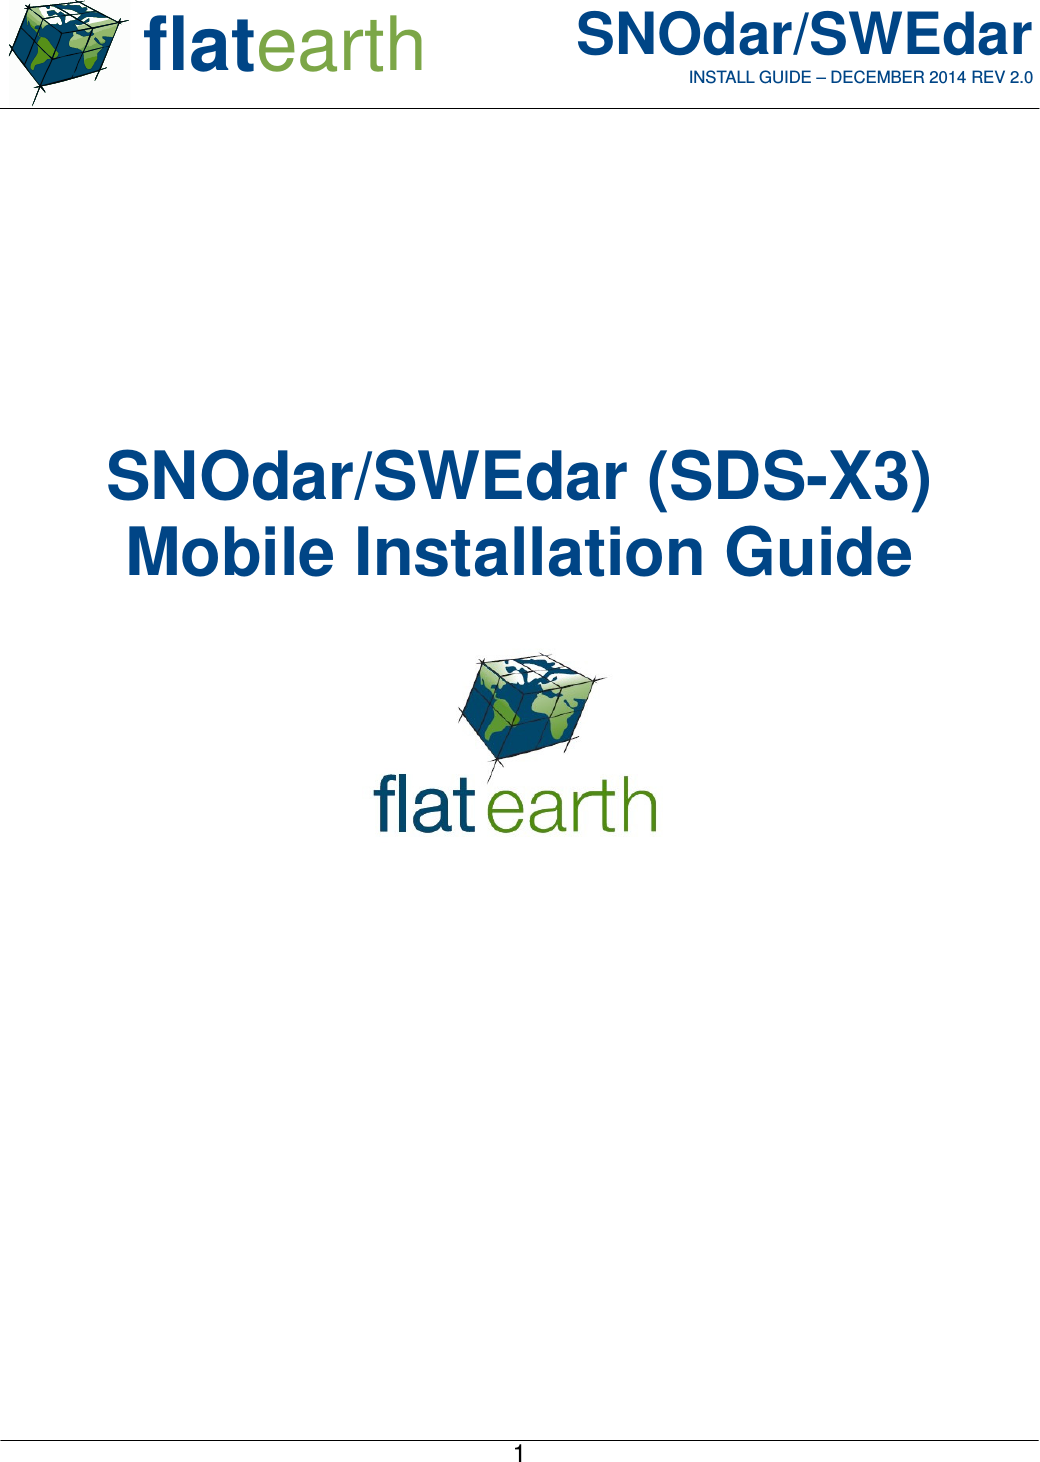  flatearth SNOdar/SWEdarINSTALL GUIDE – DECEMBER 2014 REV 2.0SNOdar/SWEdar (SDS-X3)Mobile Installation Guide 1